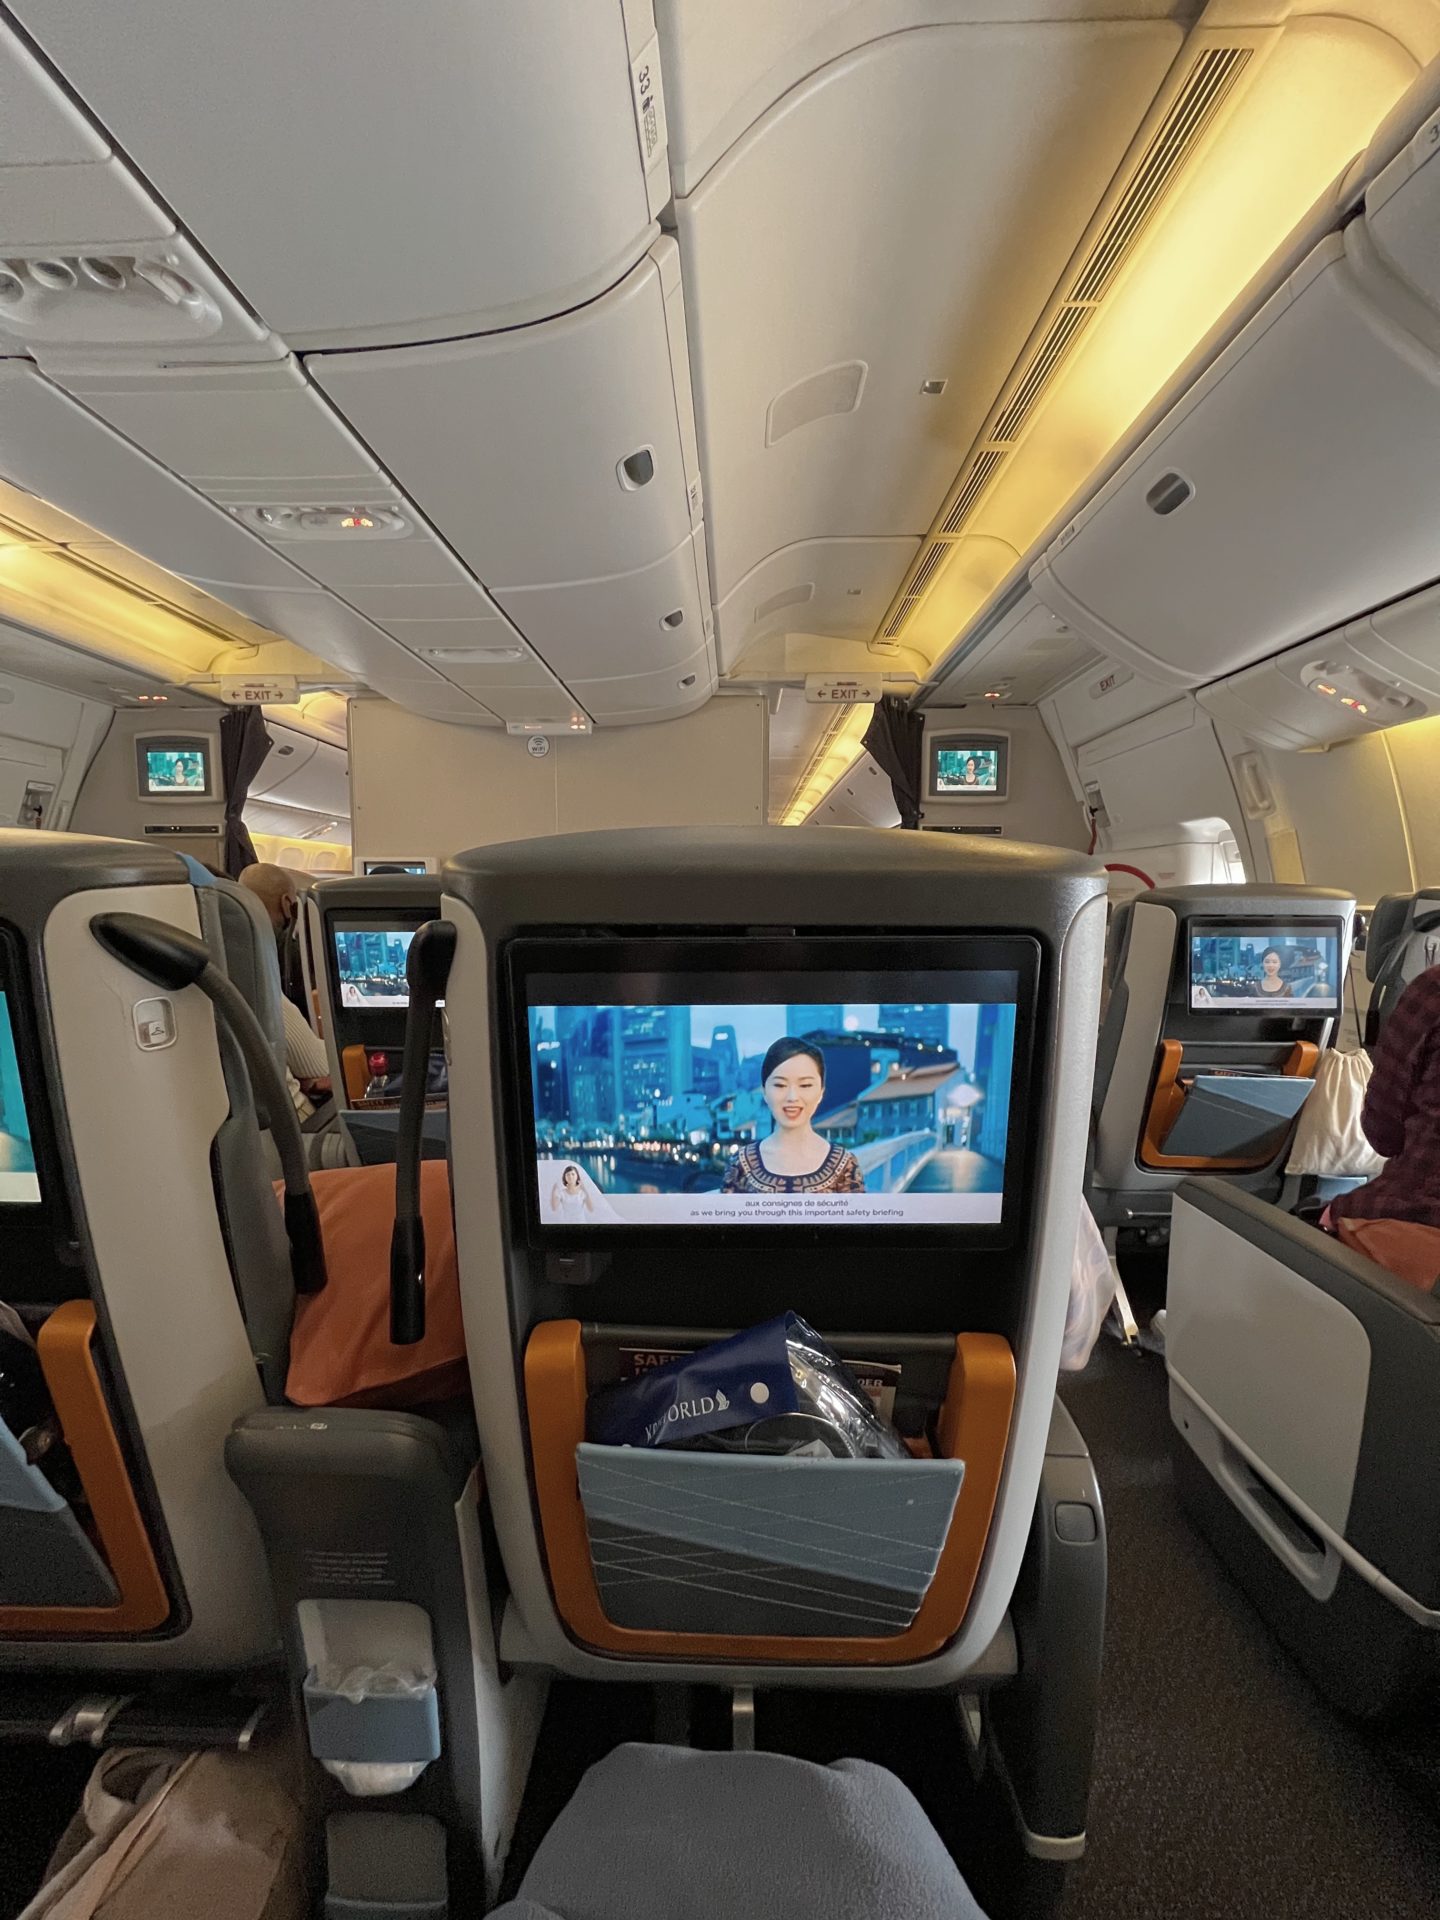 Singapore Airlines Premium Economy Overview